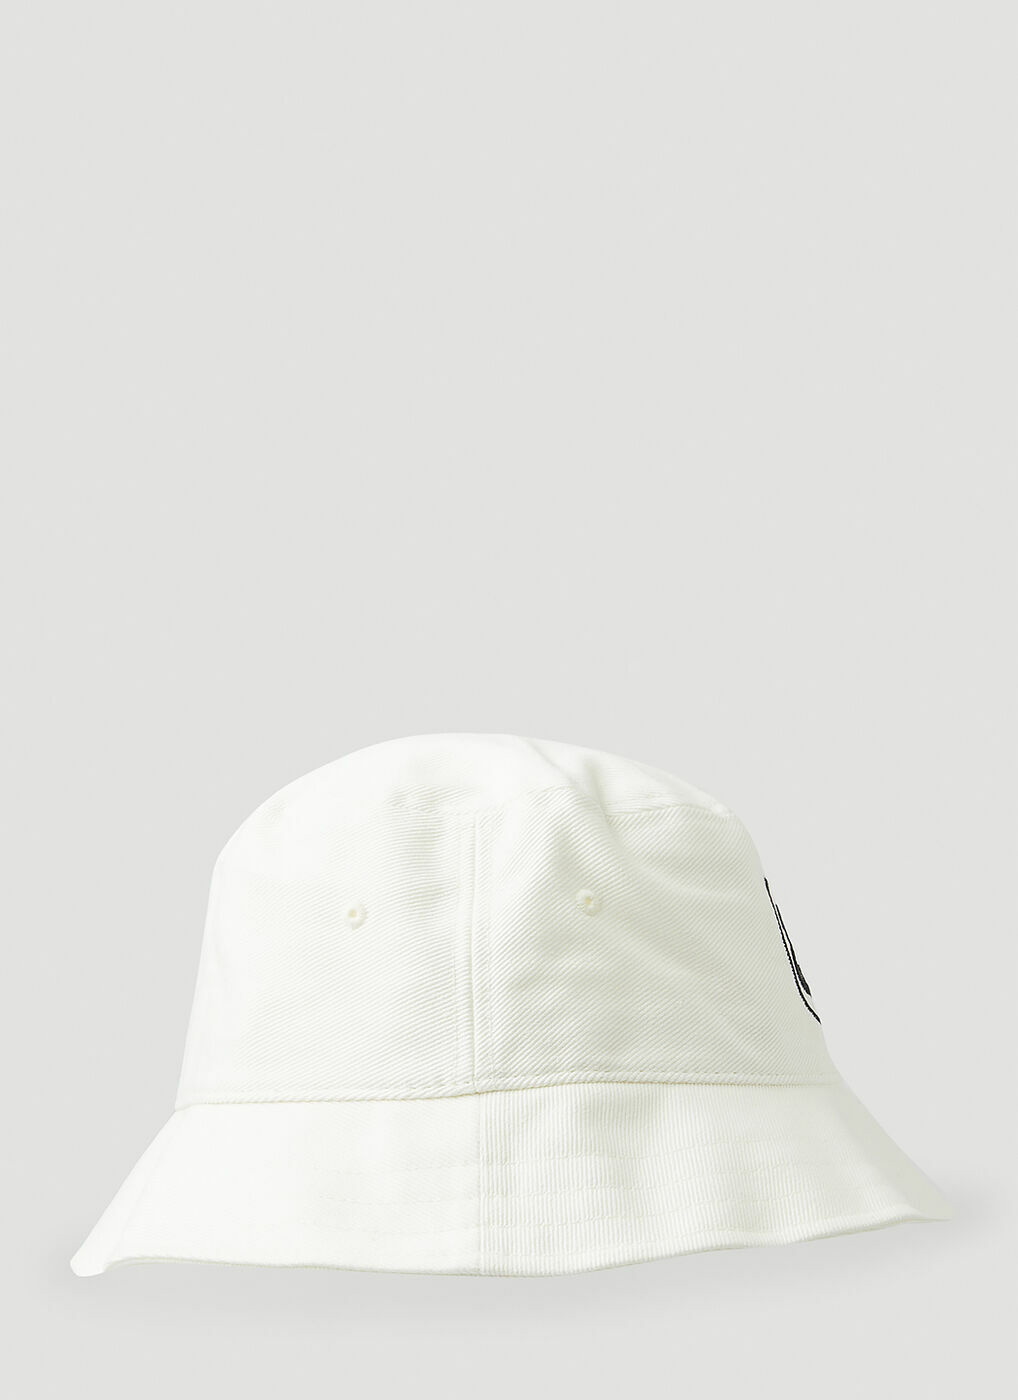 SS Link Deep Bucket Hat in White